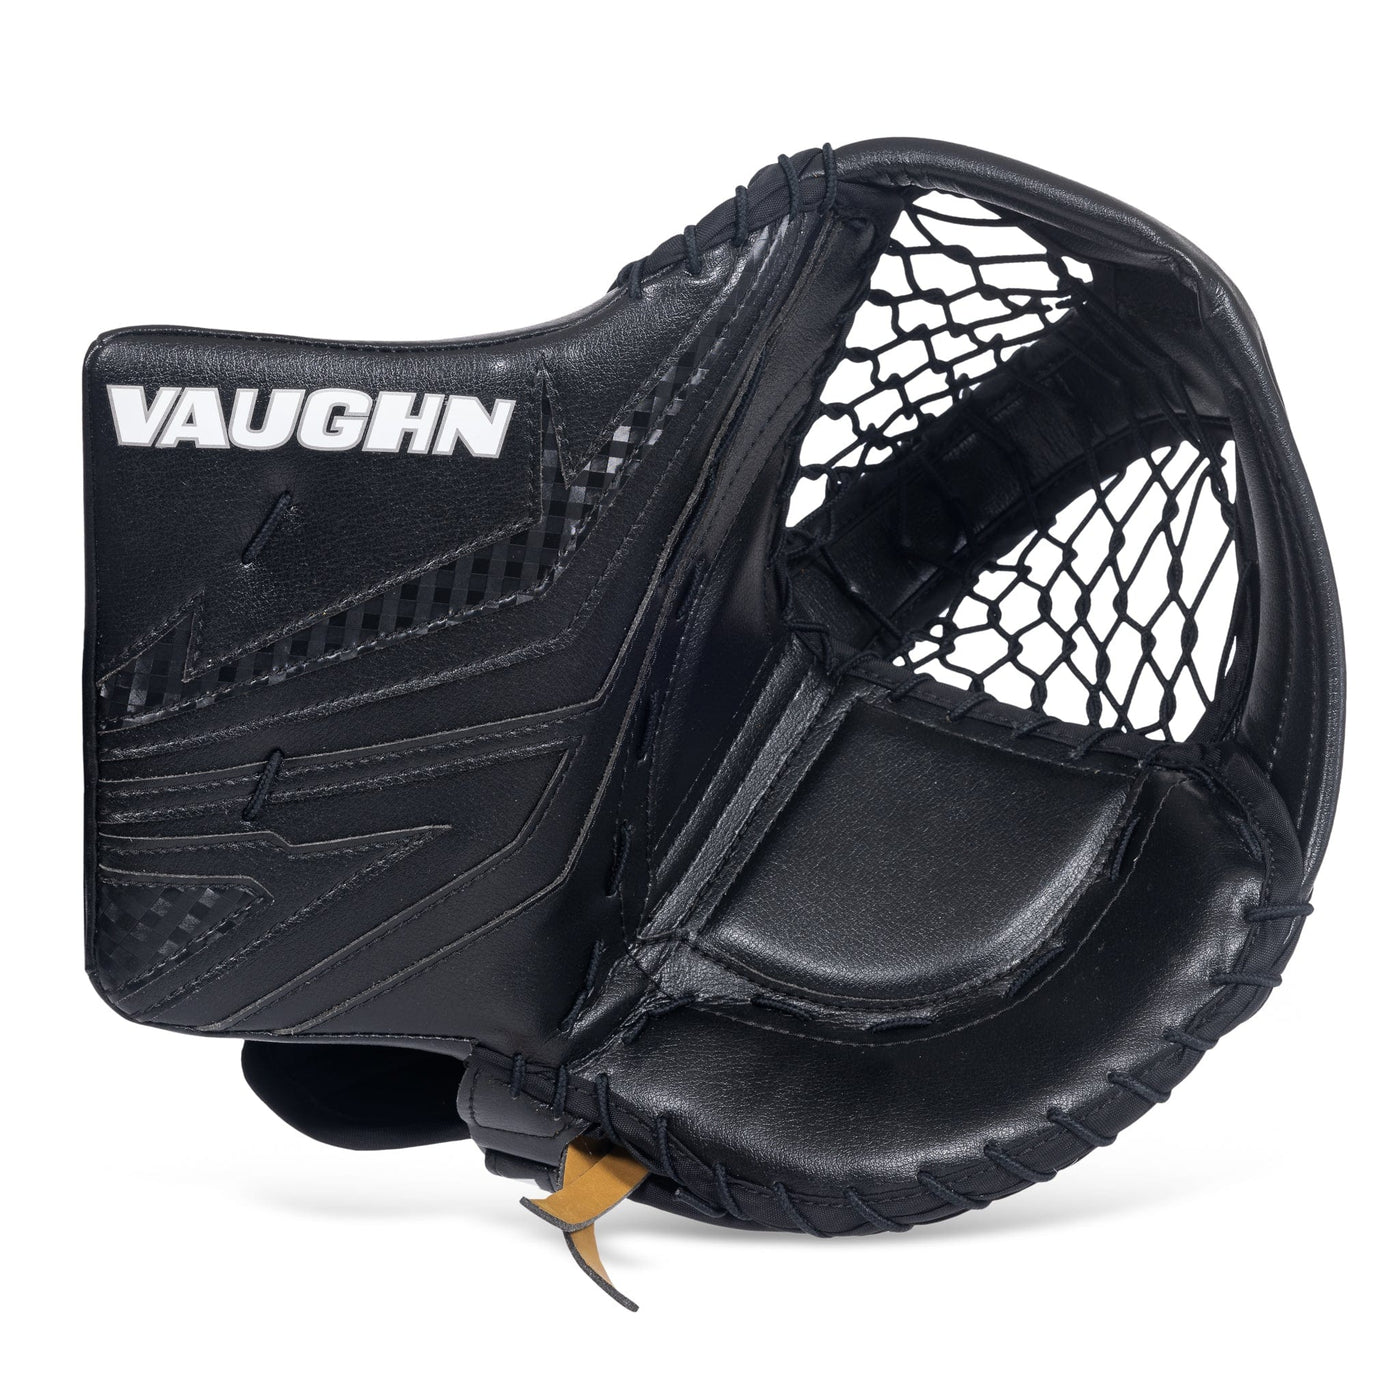 Vaughn Ventus SLR4 Intermediate Goalie Catcher - TheHockeyShop.com